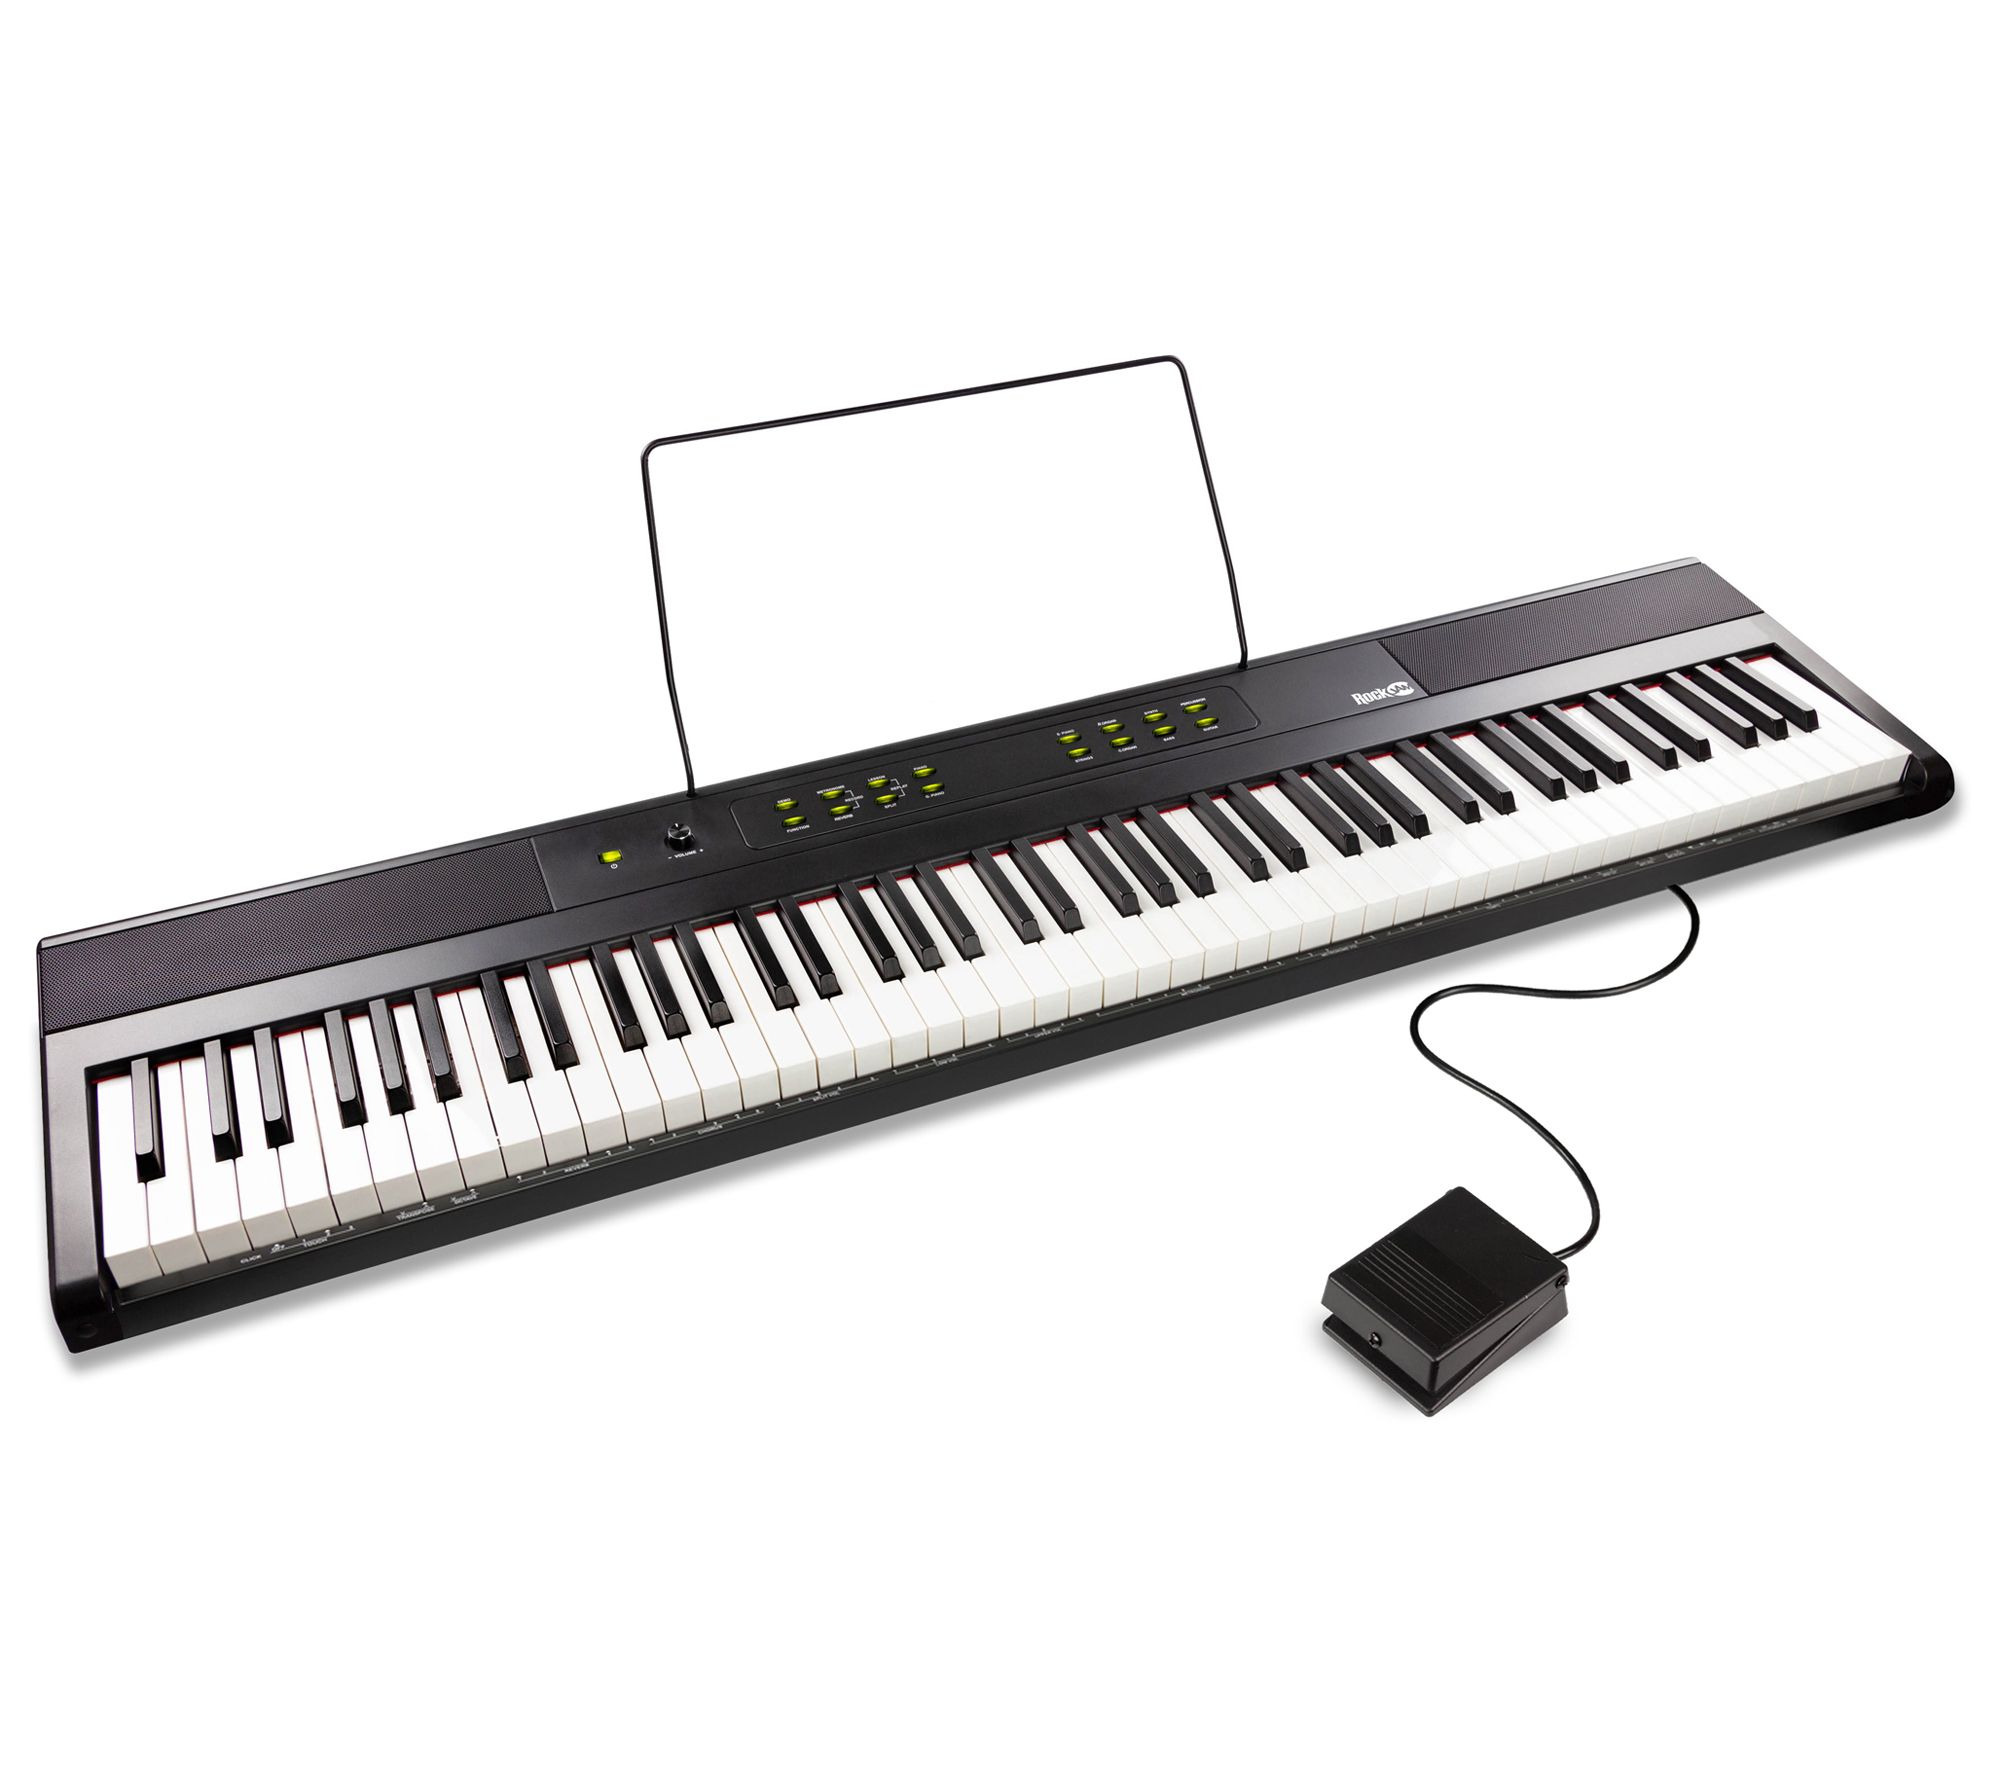 Review: Rockjam 88 Keys Beginner Digital Piano